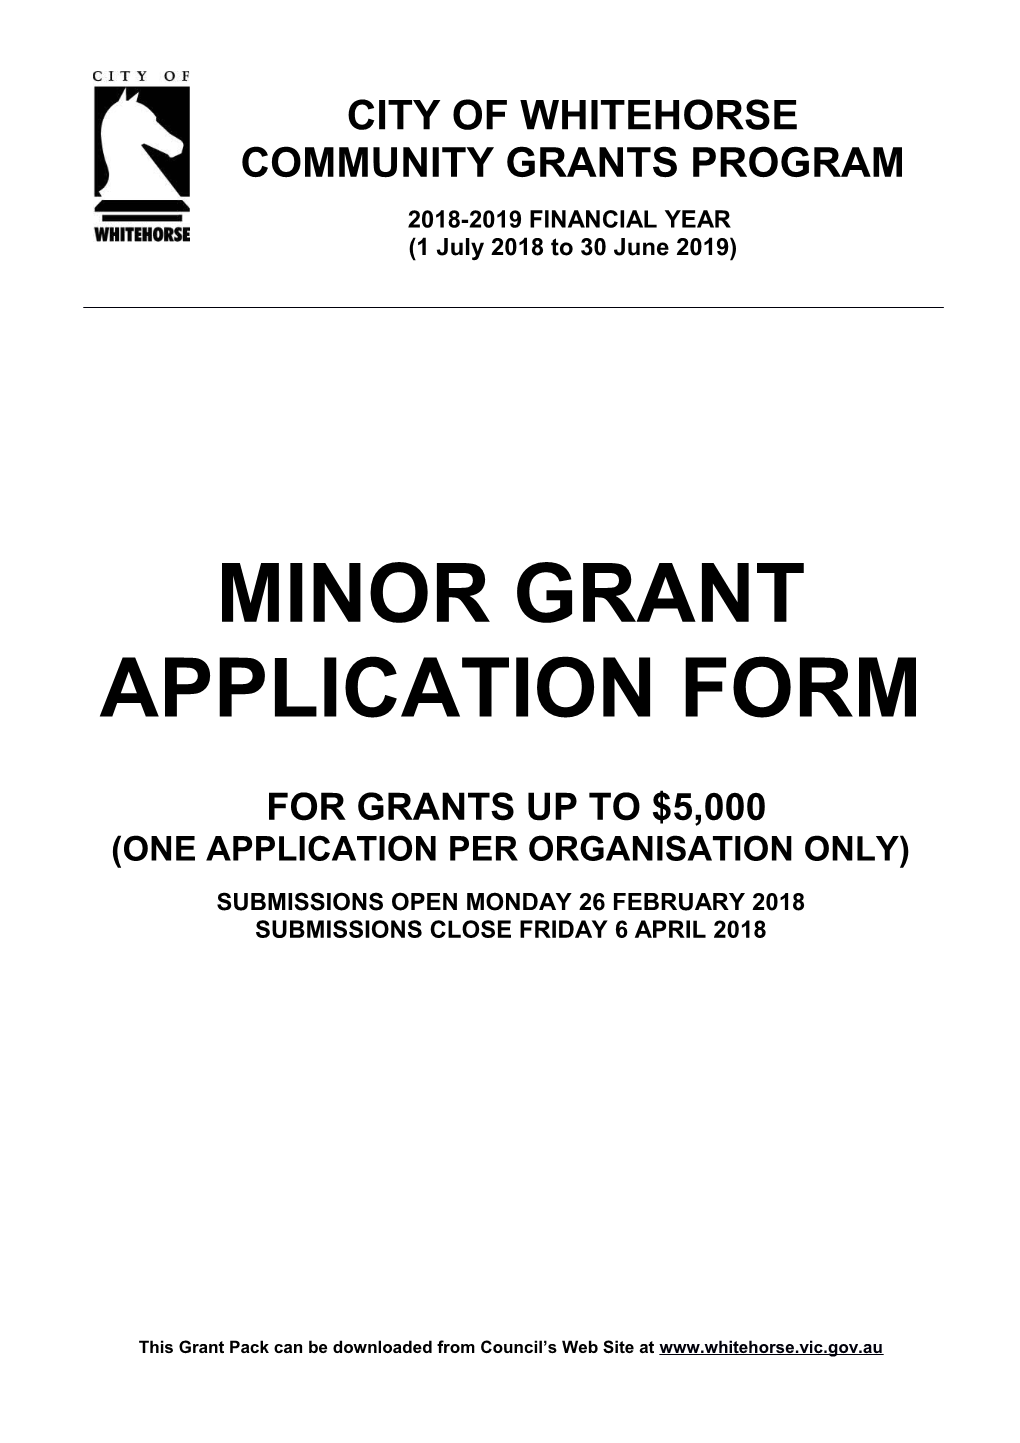 Minor Grant Application Form